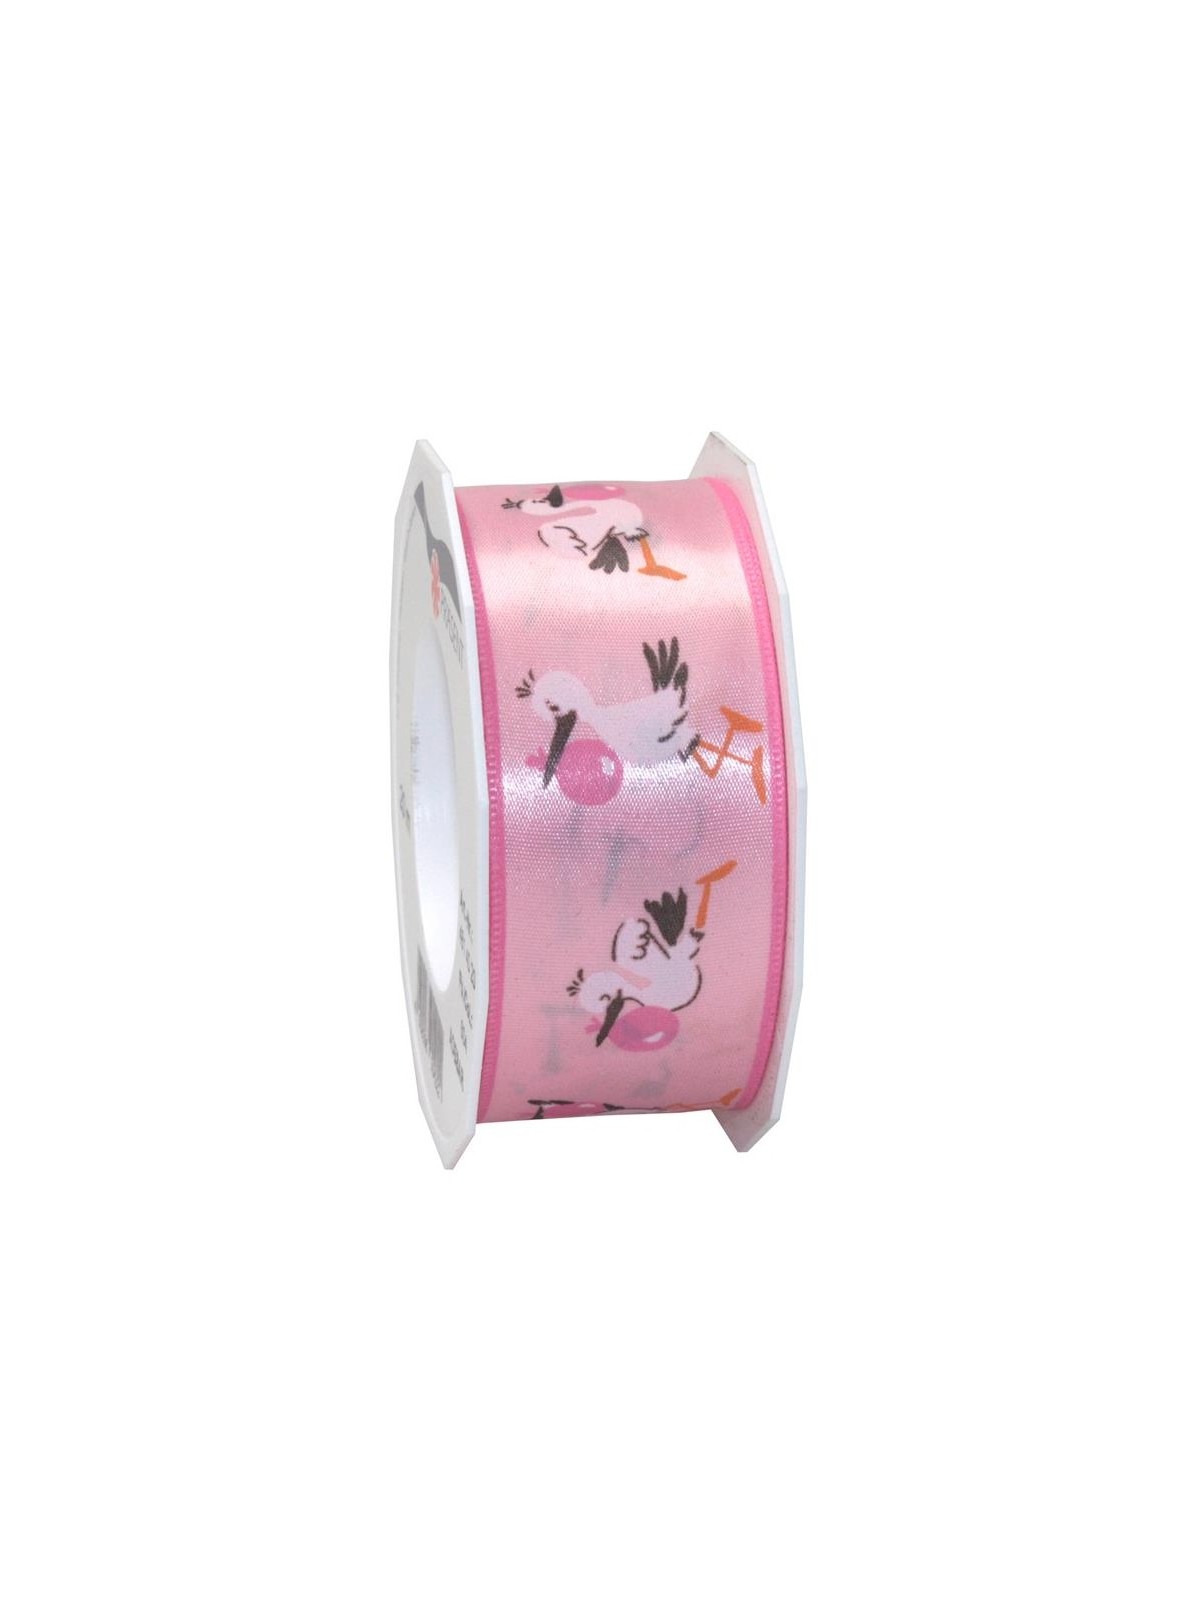 Satin ribbon - baby pink - stork - 2m/ 40mm